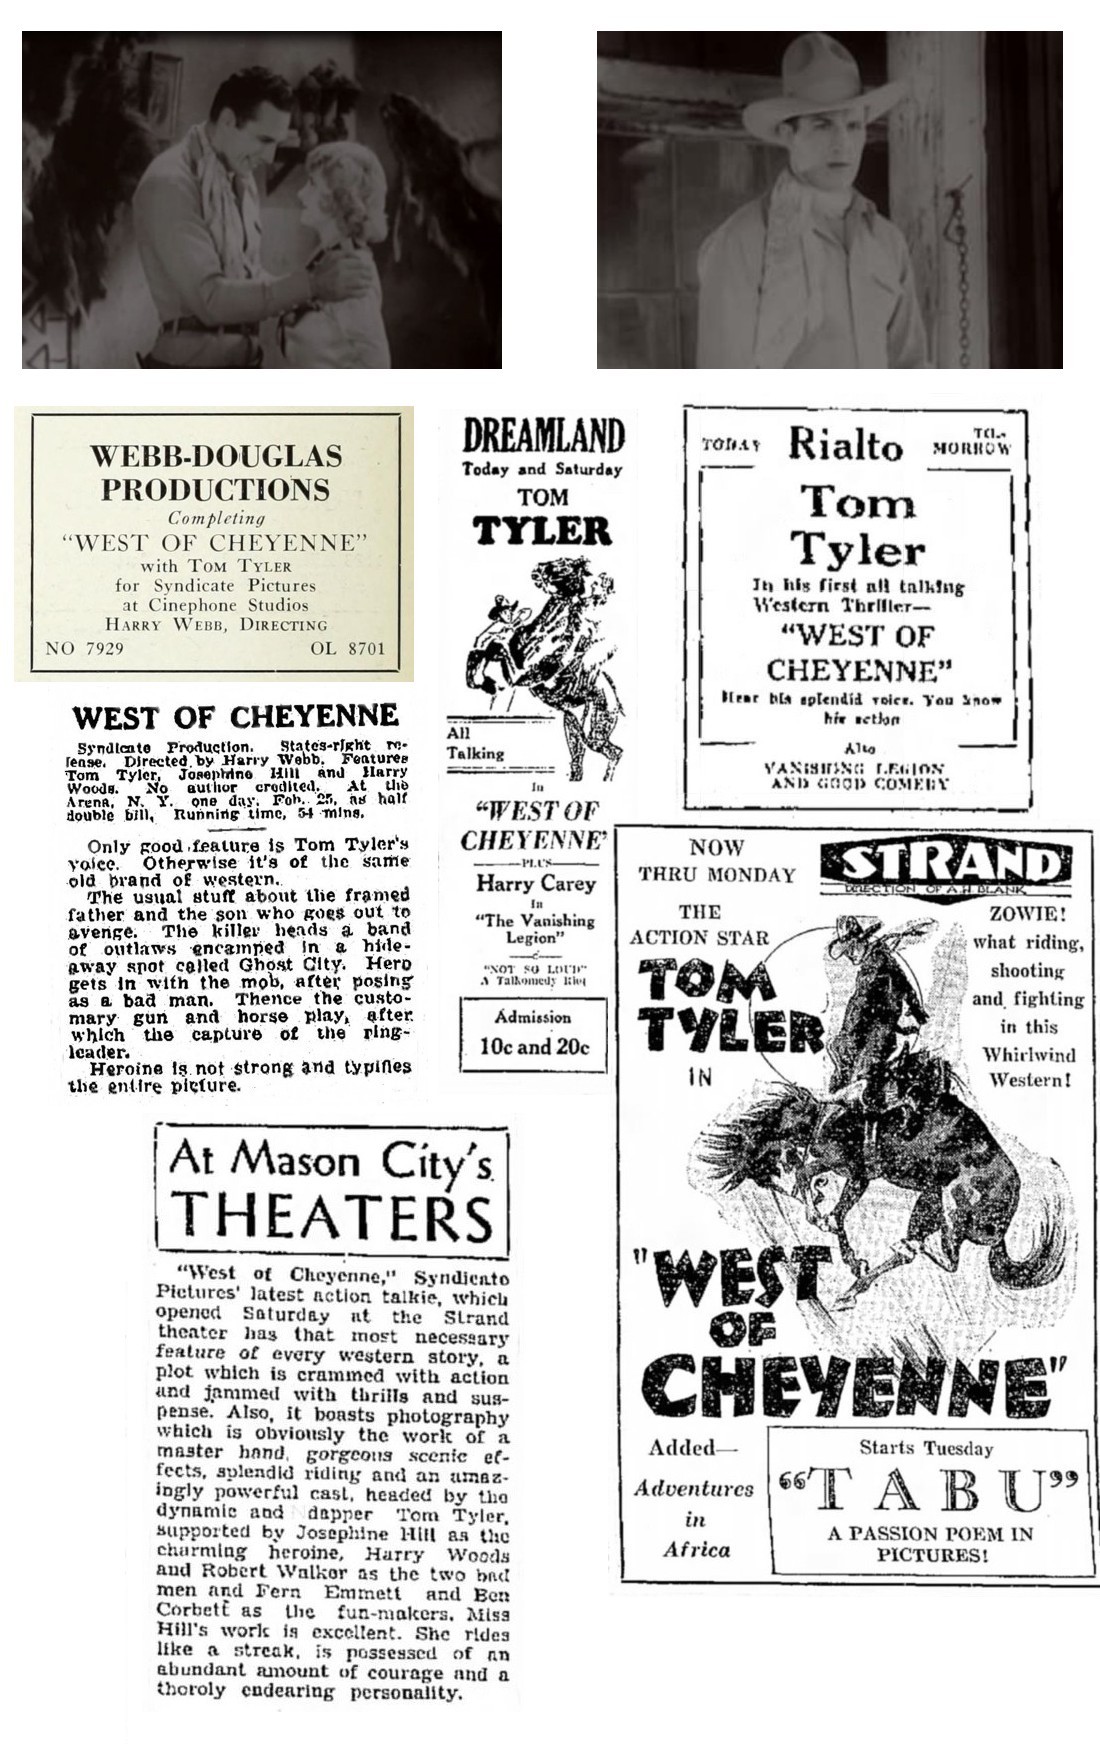 West of Cheyenne screencaps film reviews cinema ads